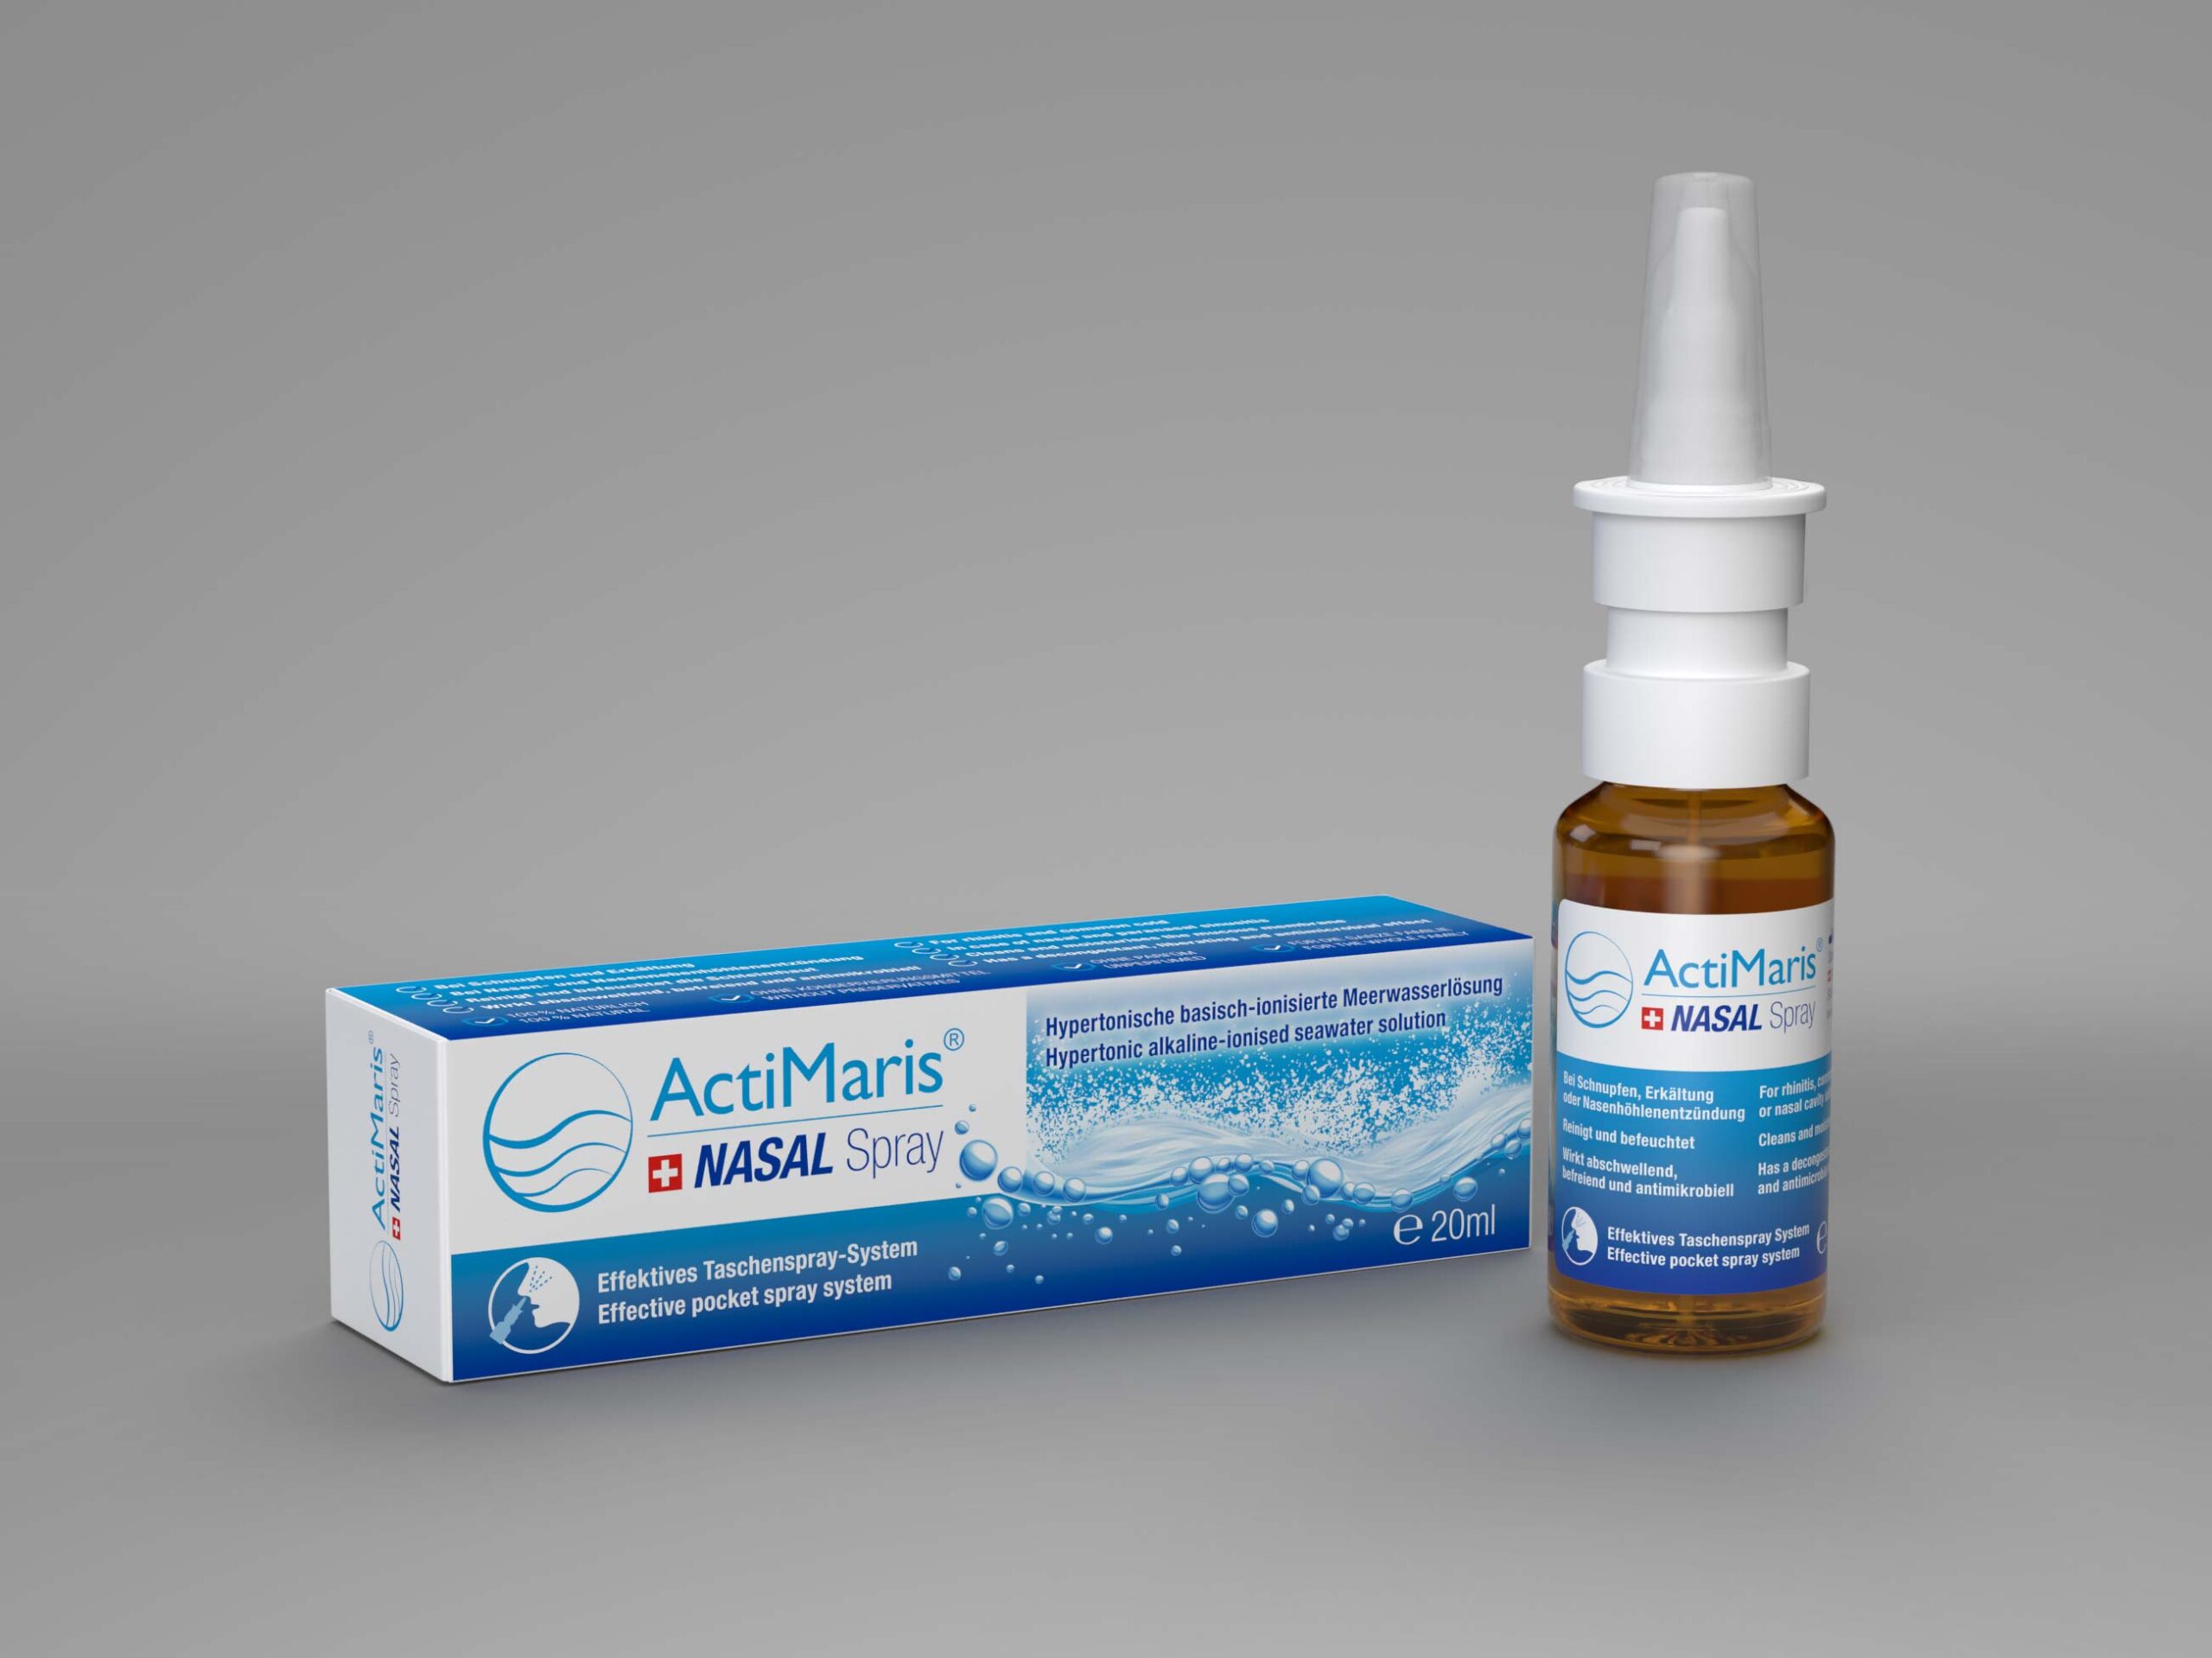 ActiMaris NASAL Spray - Effective pocket spray system